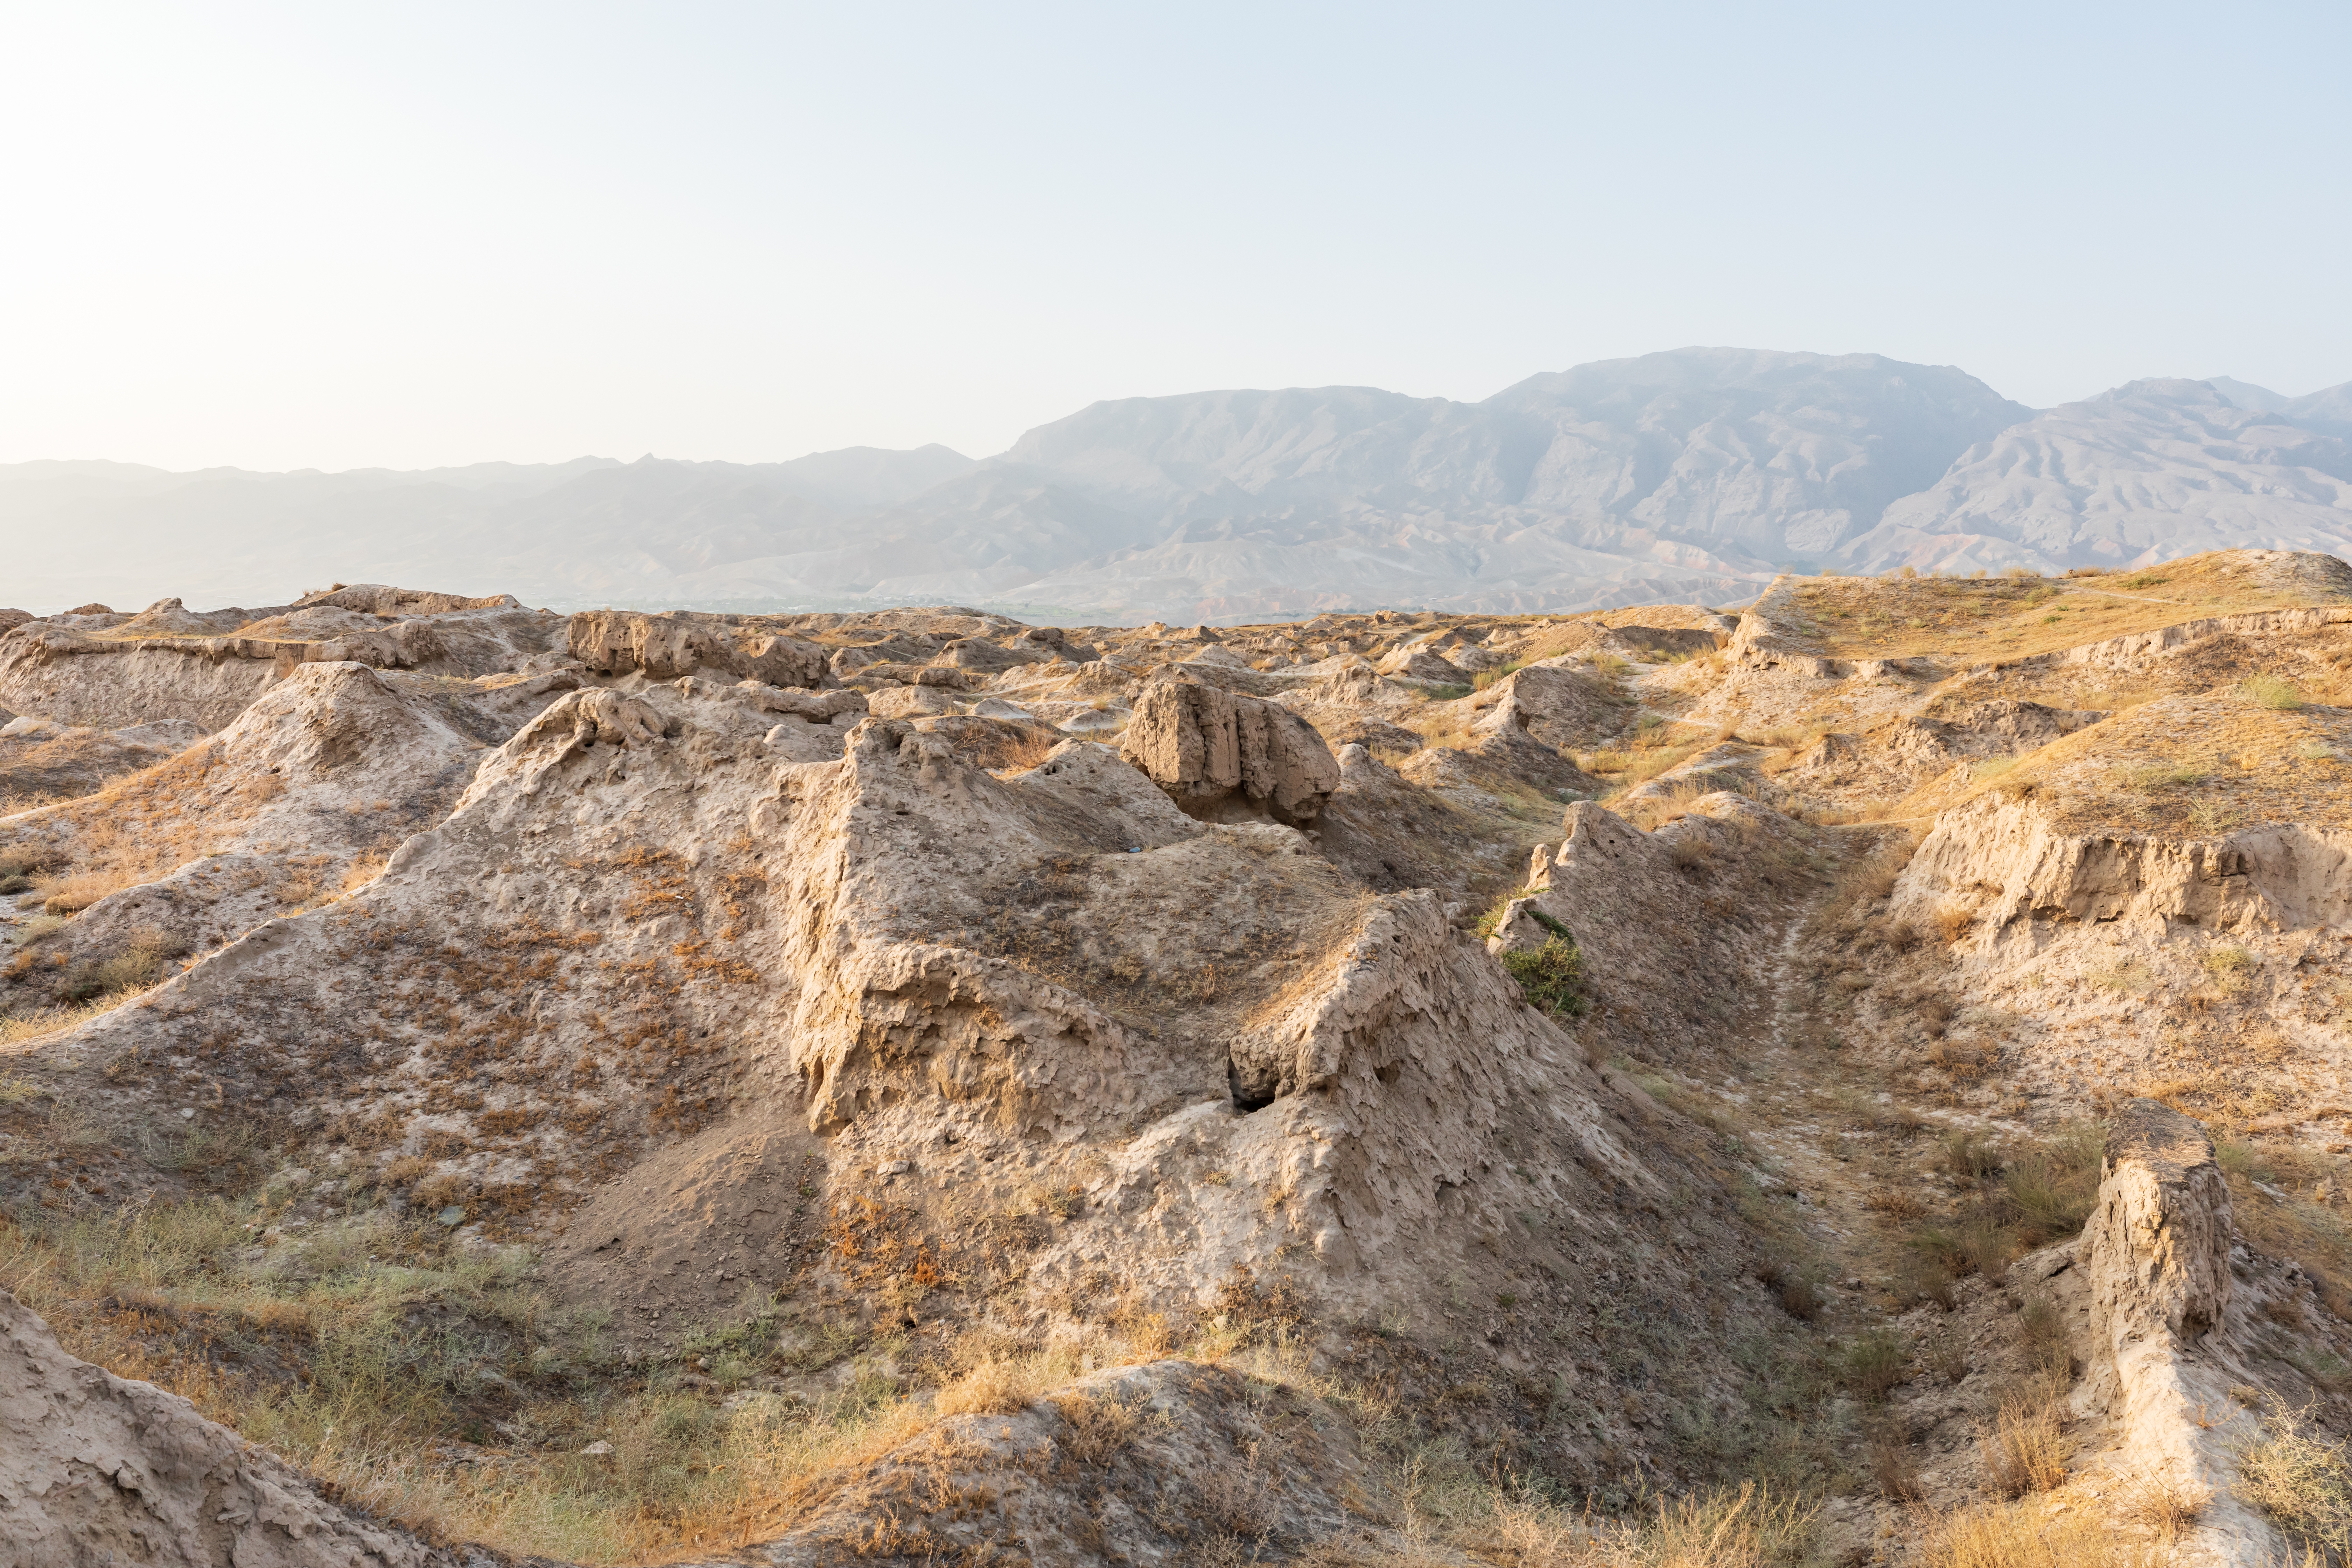 The rocky landscape around Ancient Panjakent. – © Emily Marie Wilson / Shutterstock